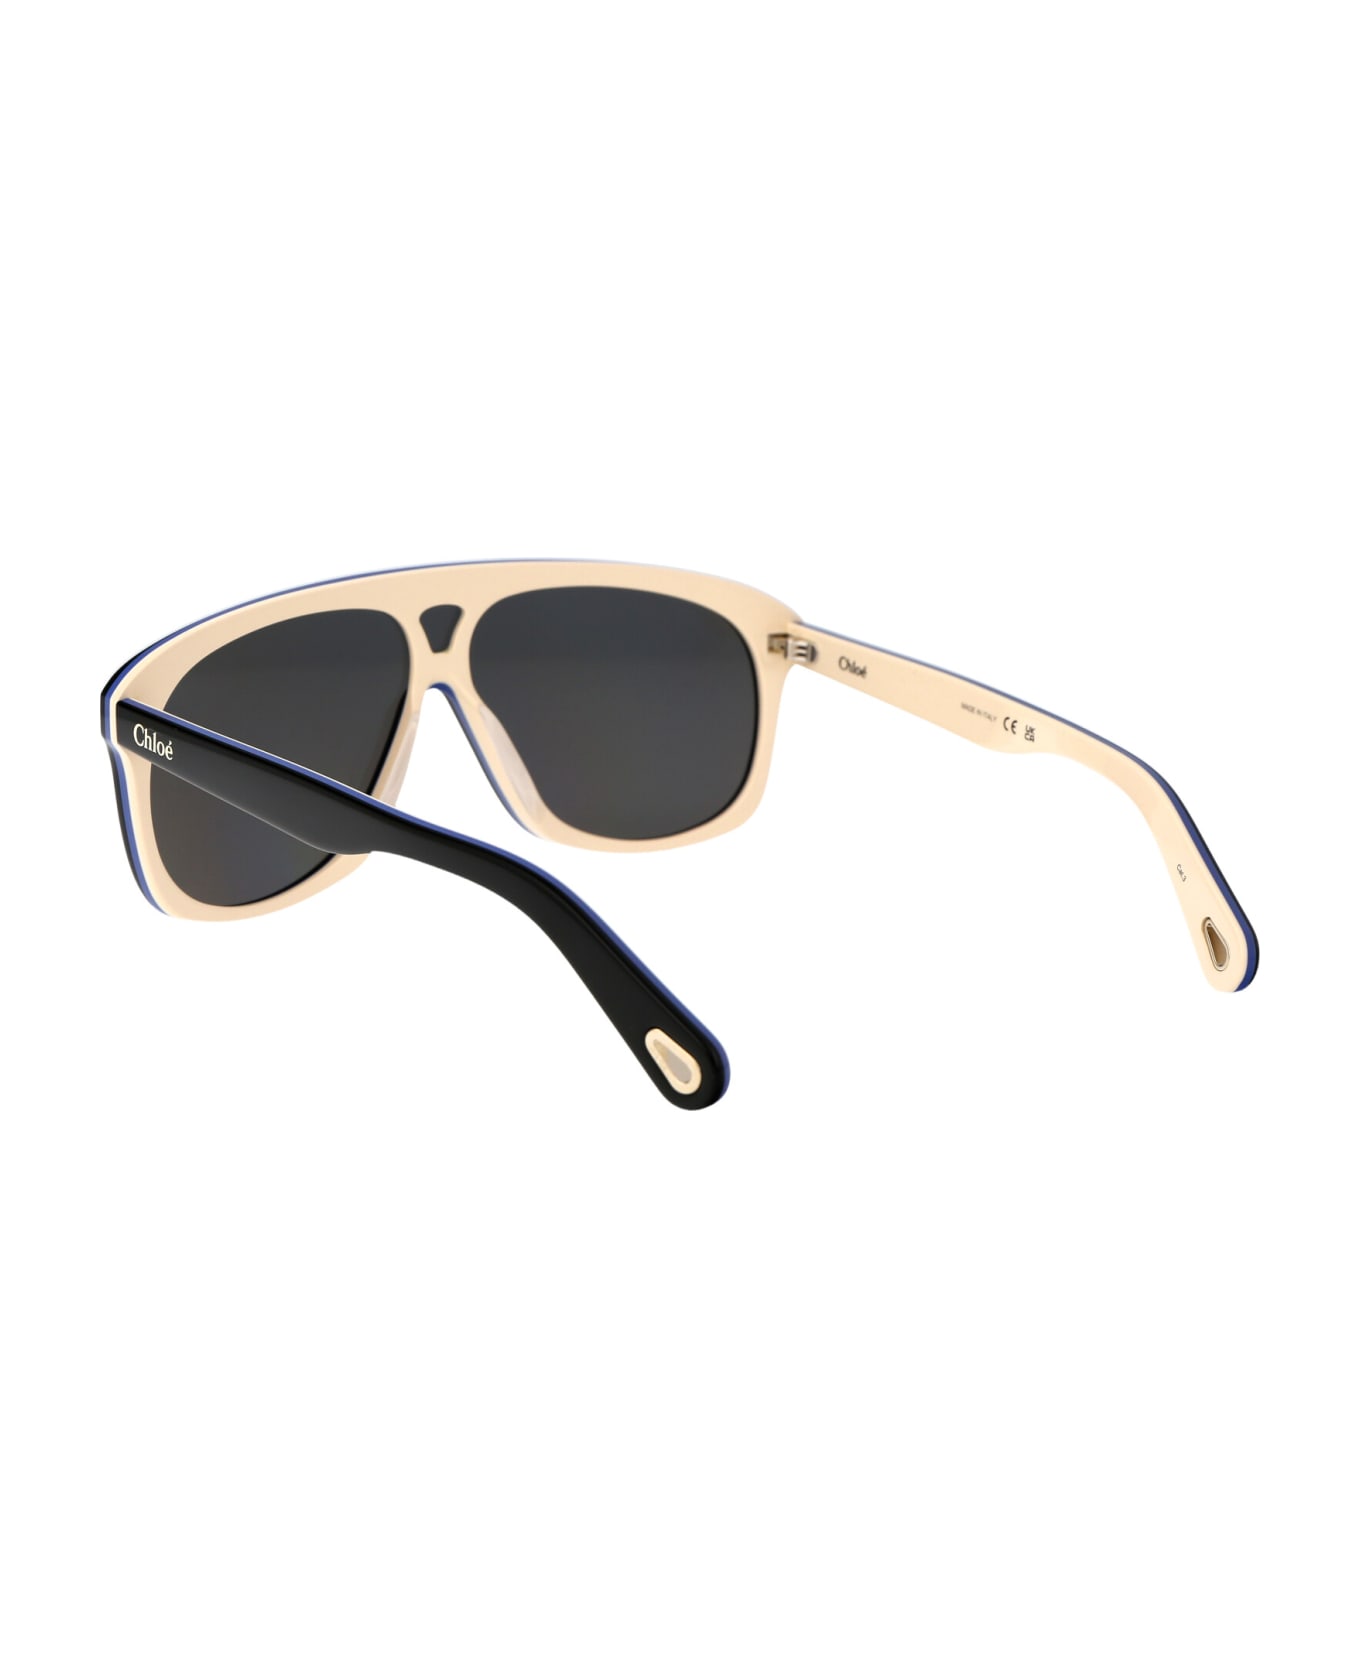 Chloé Eyewear Ch0212s Sunglasses - 004 BLACK BLACK SILVER サングラス